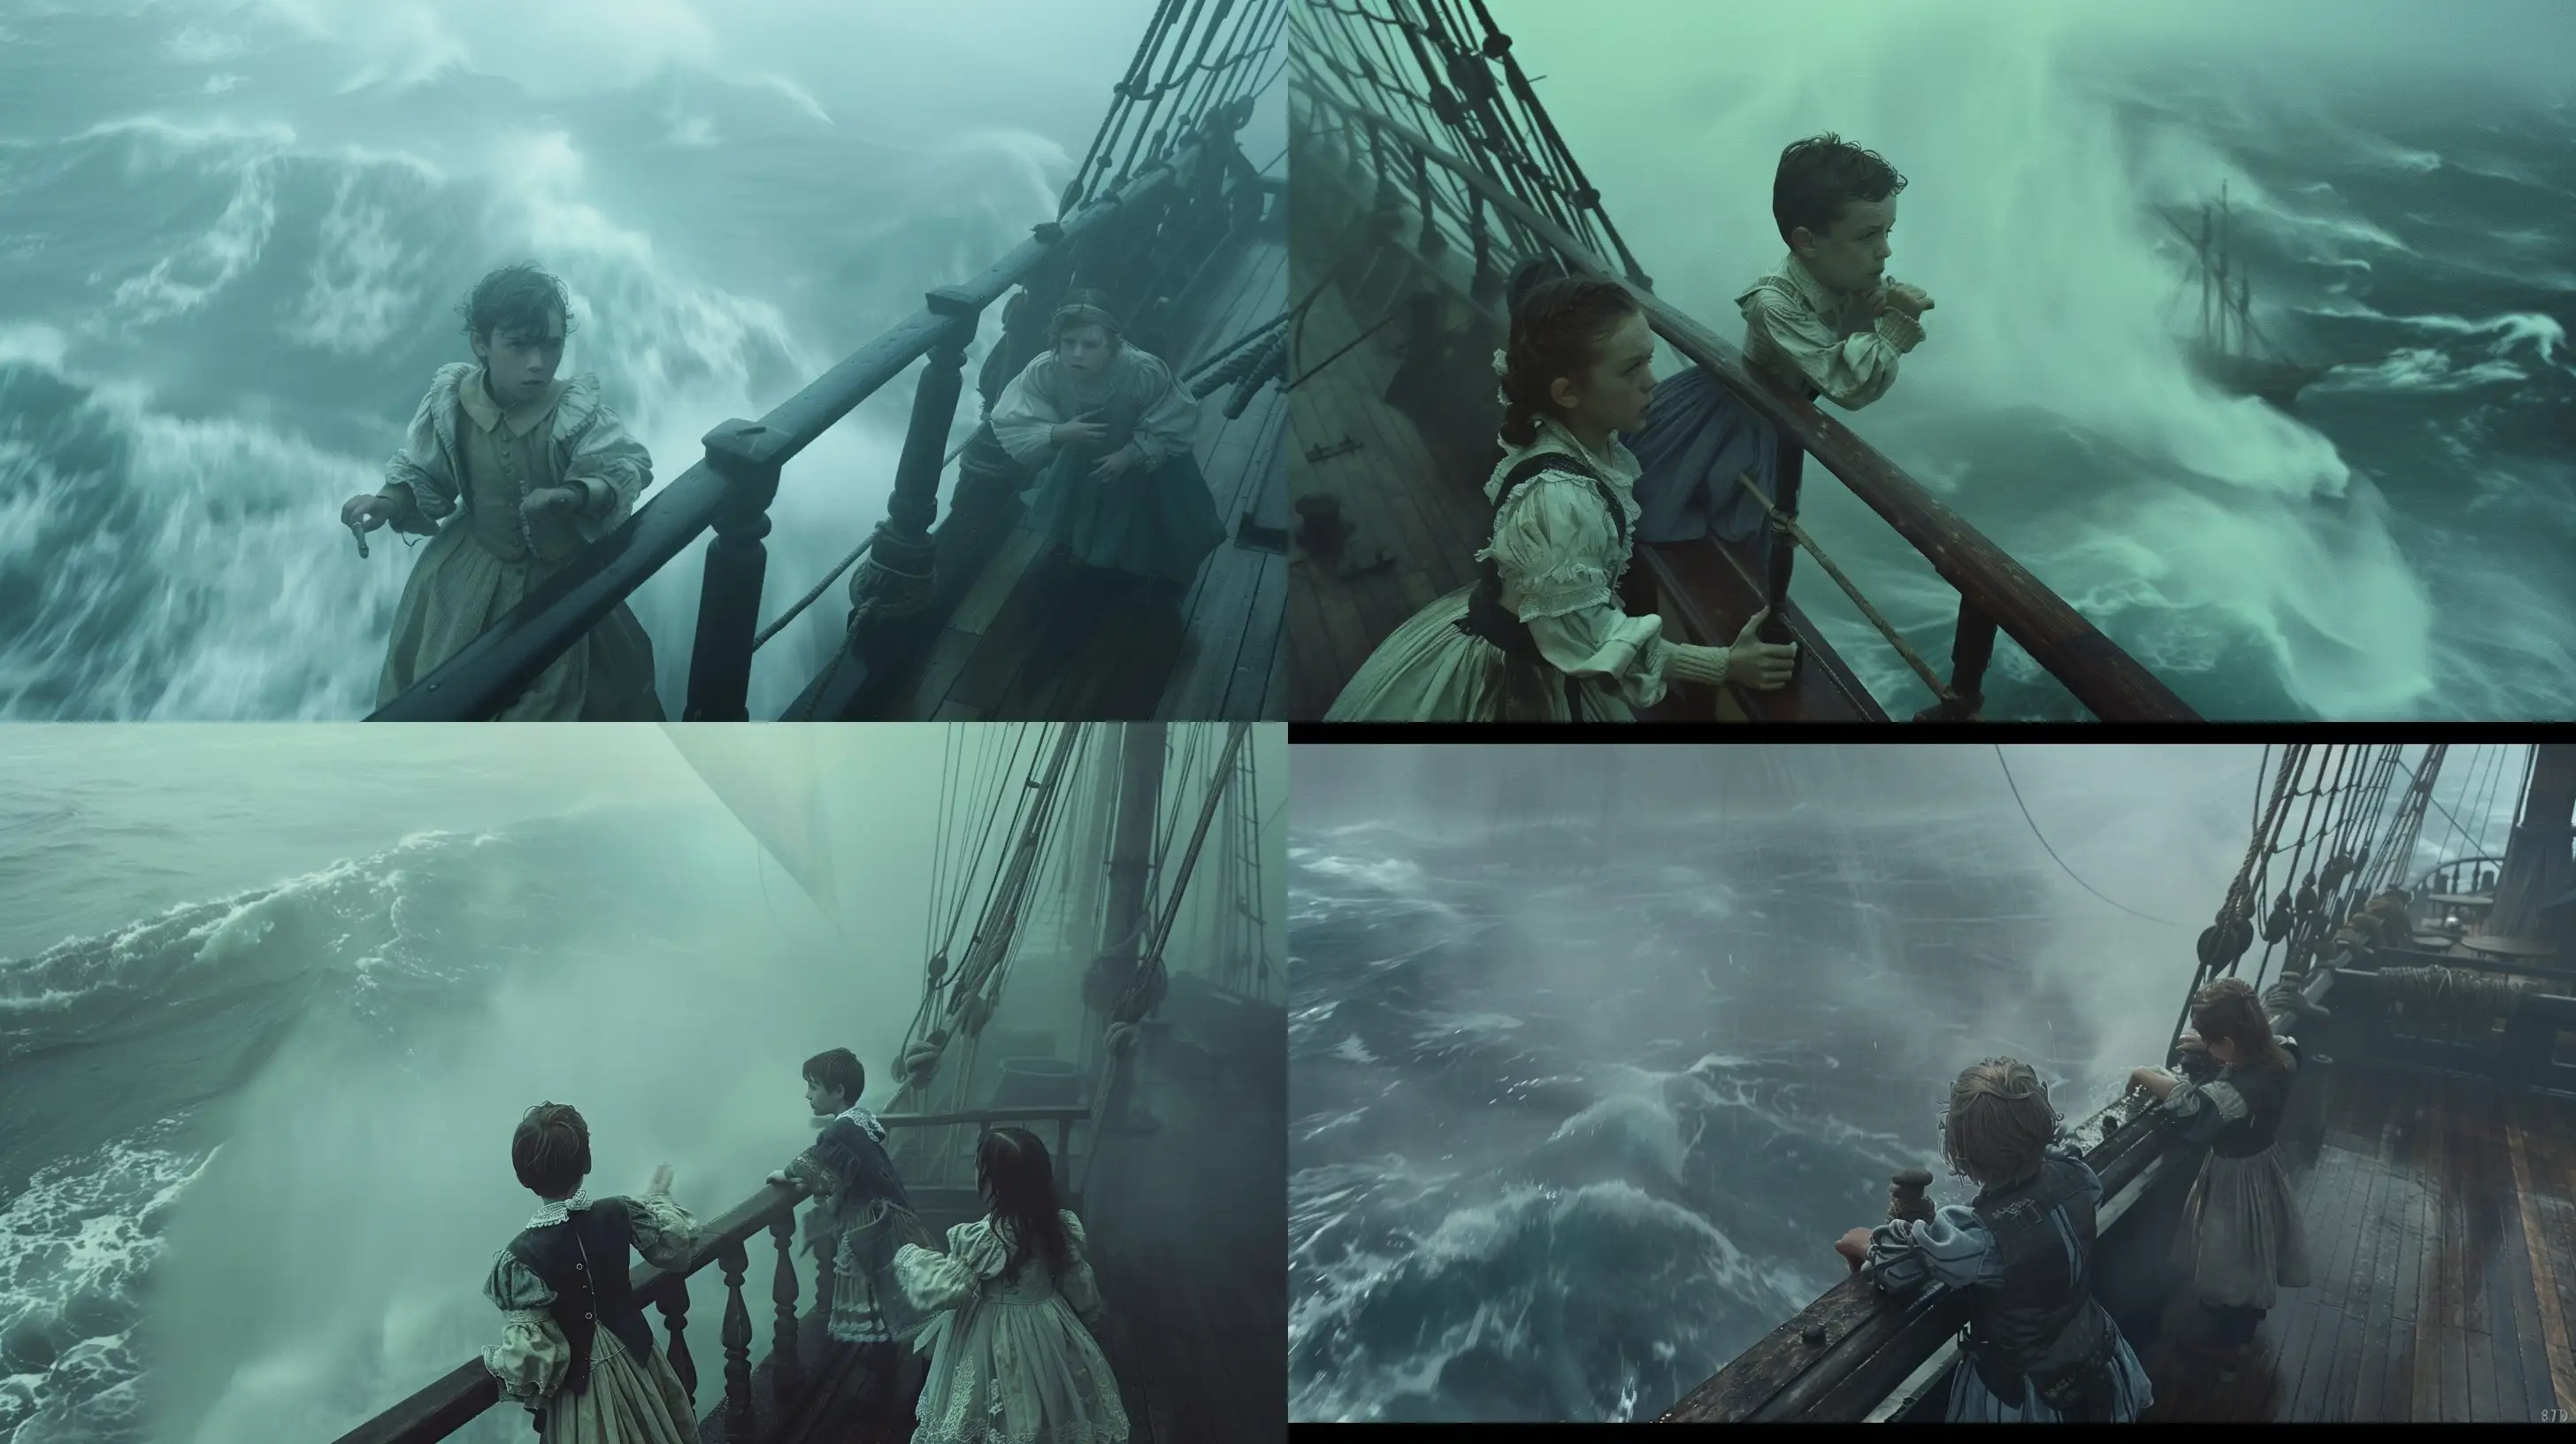 Mysterious-19th-Century-Children-on-Ship-Deck-Amidst-Ocean-Storm